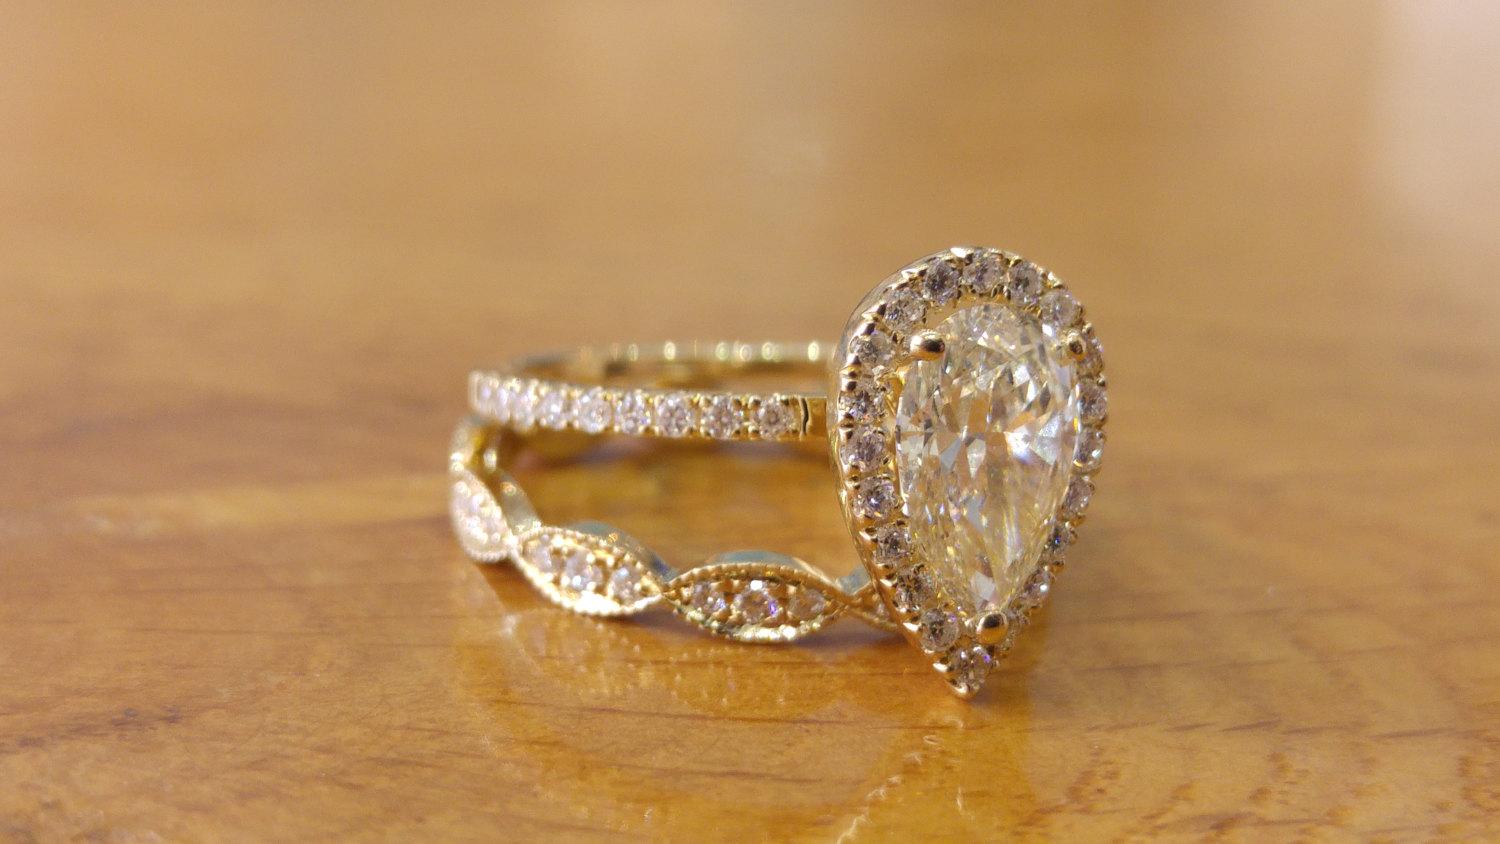 1 3/4 Carat Pear Diamond Engagement Ring Set, Diamond Rings Set, Pear Halo Ring, Diamond Engagement Ring Vintage, Art Deco Pear Shaped Ring
 
 Main Stone Name: Natural Diamond
 Main Stone Weight: 1.0 ct.
 Main Stone Clarity: SI1
 Main Stone Color: